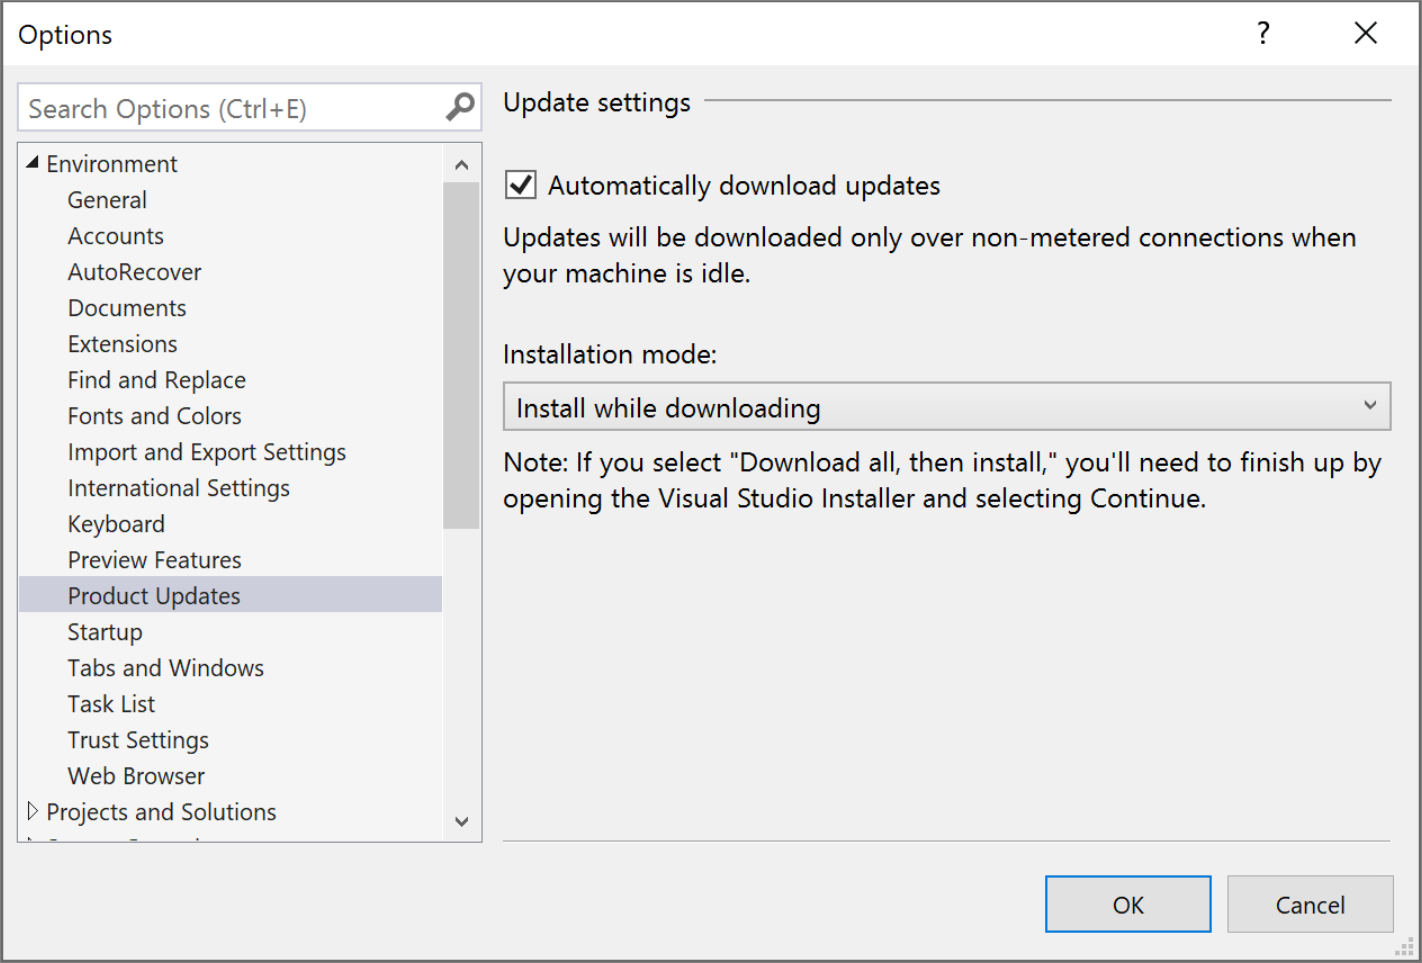 Screenshot showing the updates settings in Visual Studio.